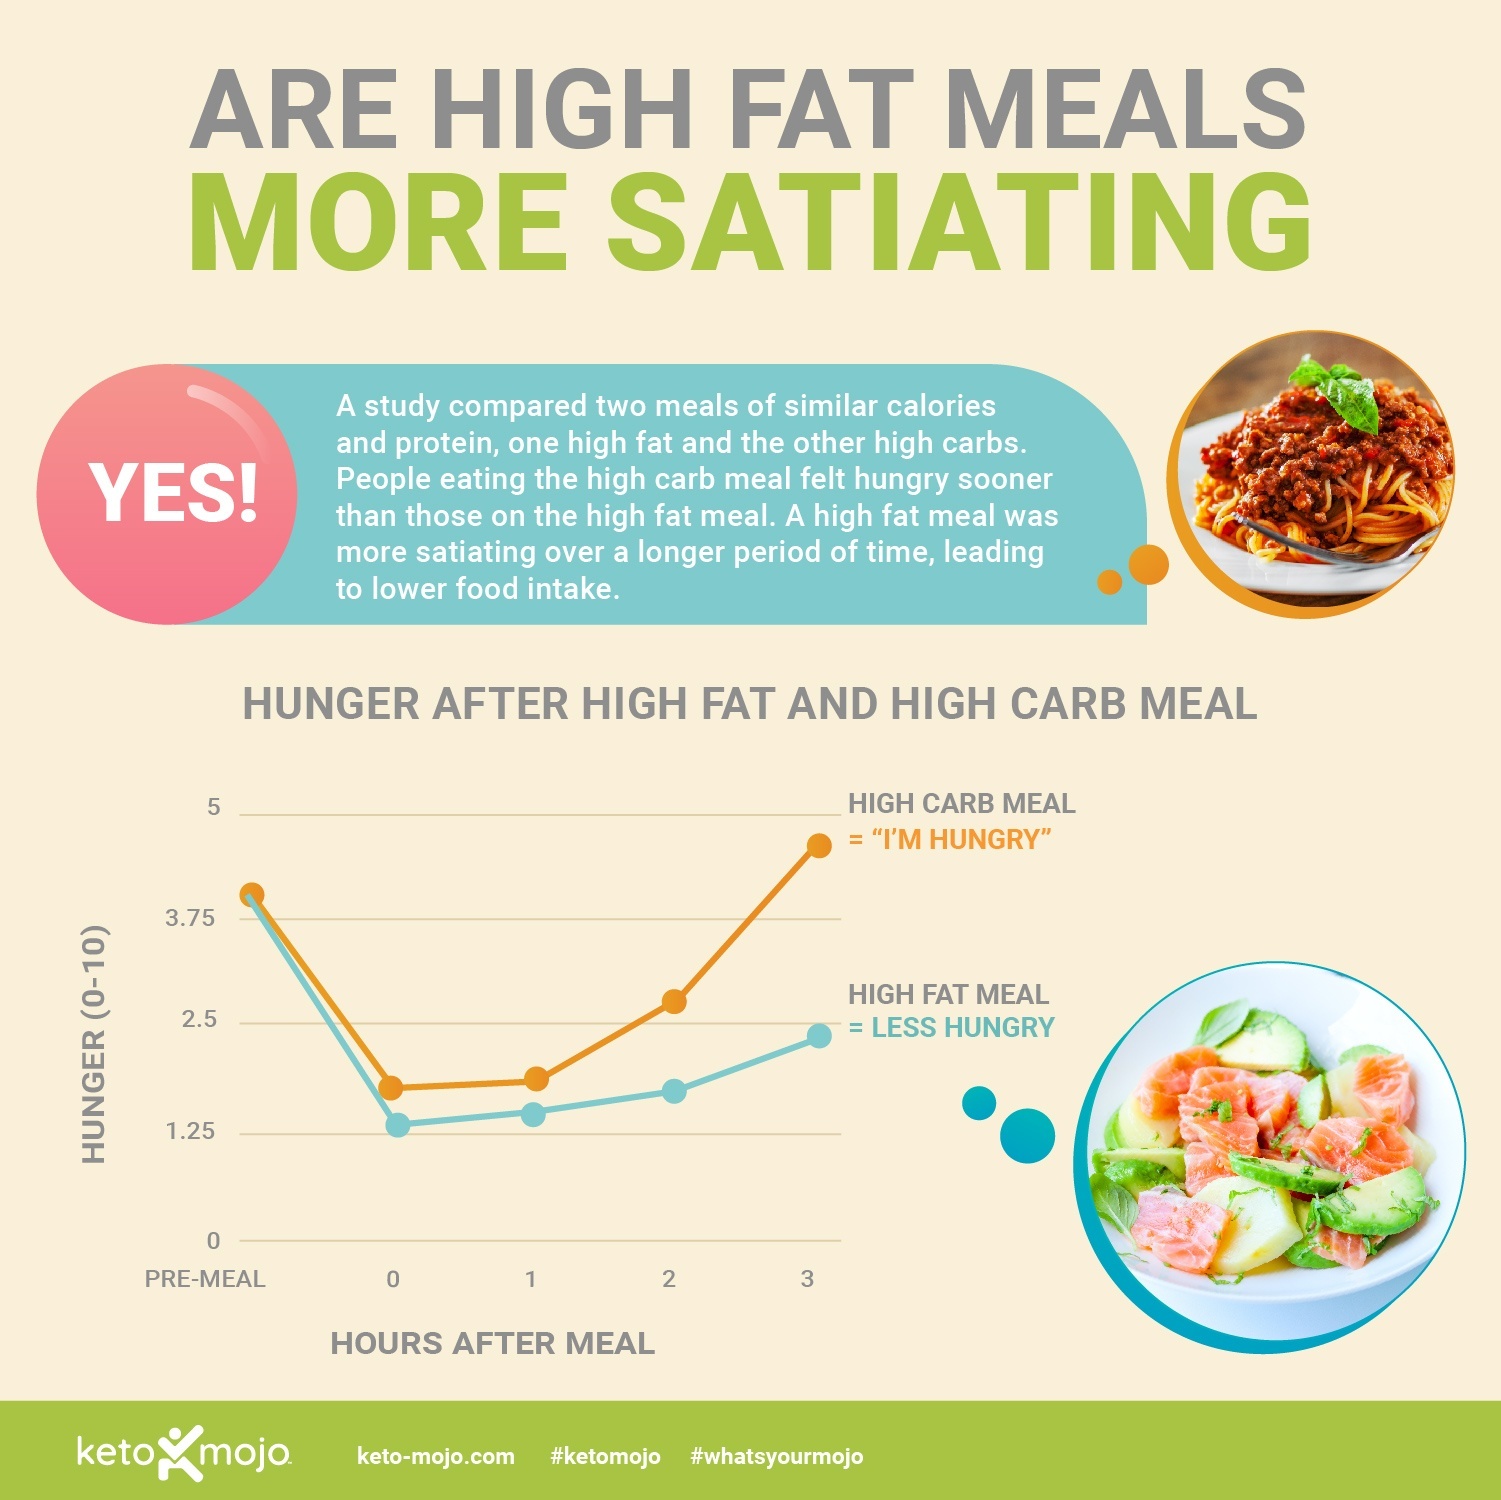 Keto-Mojo: High fat meals more satiating